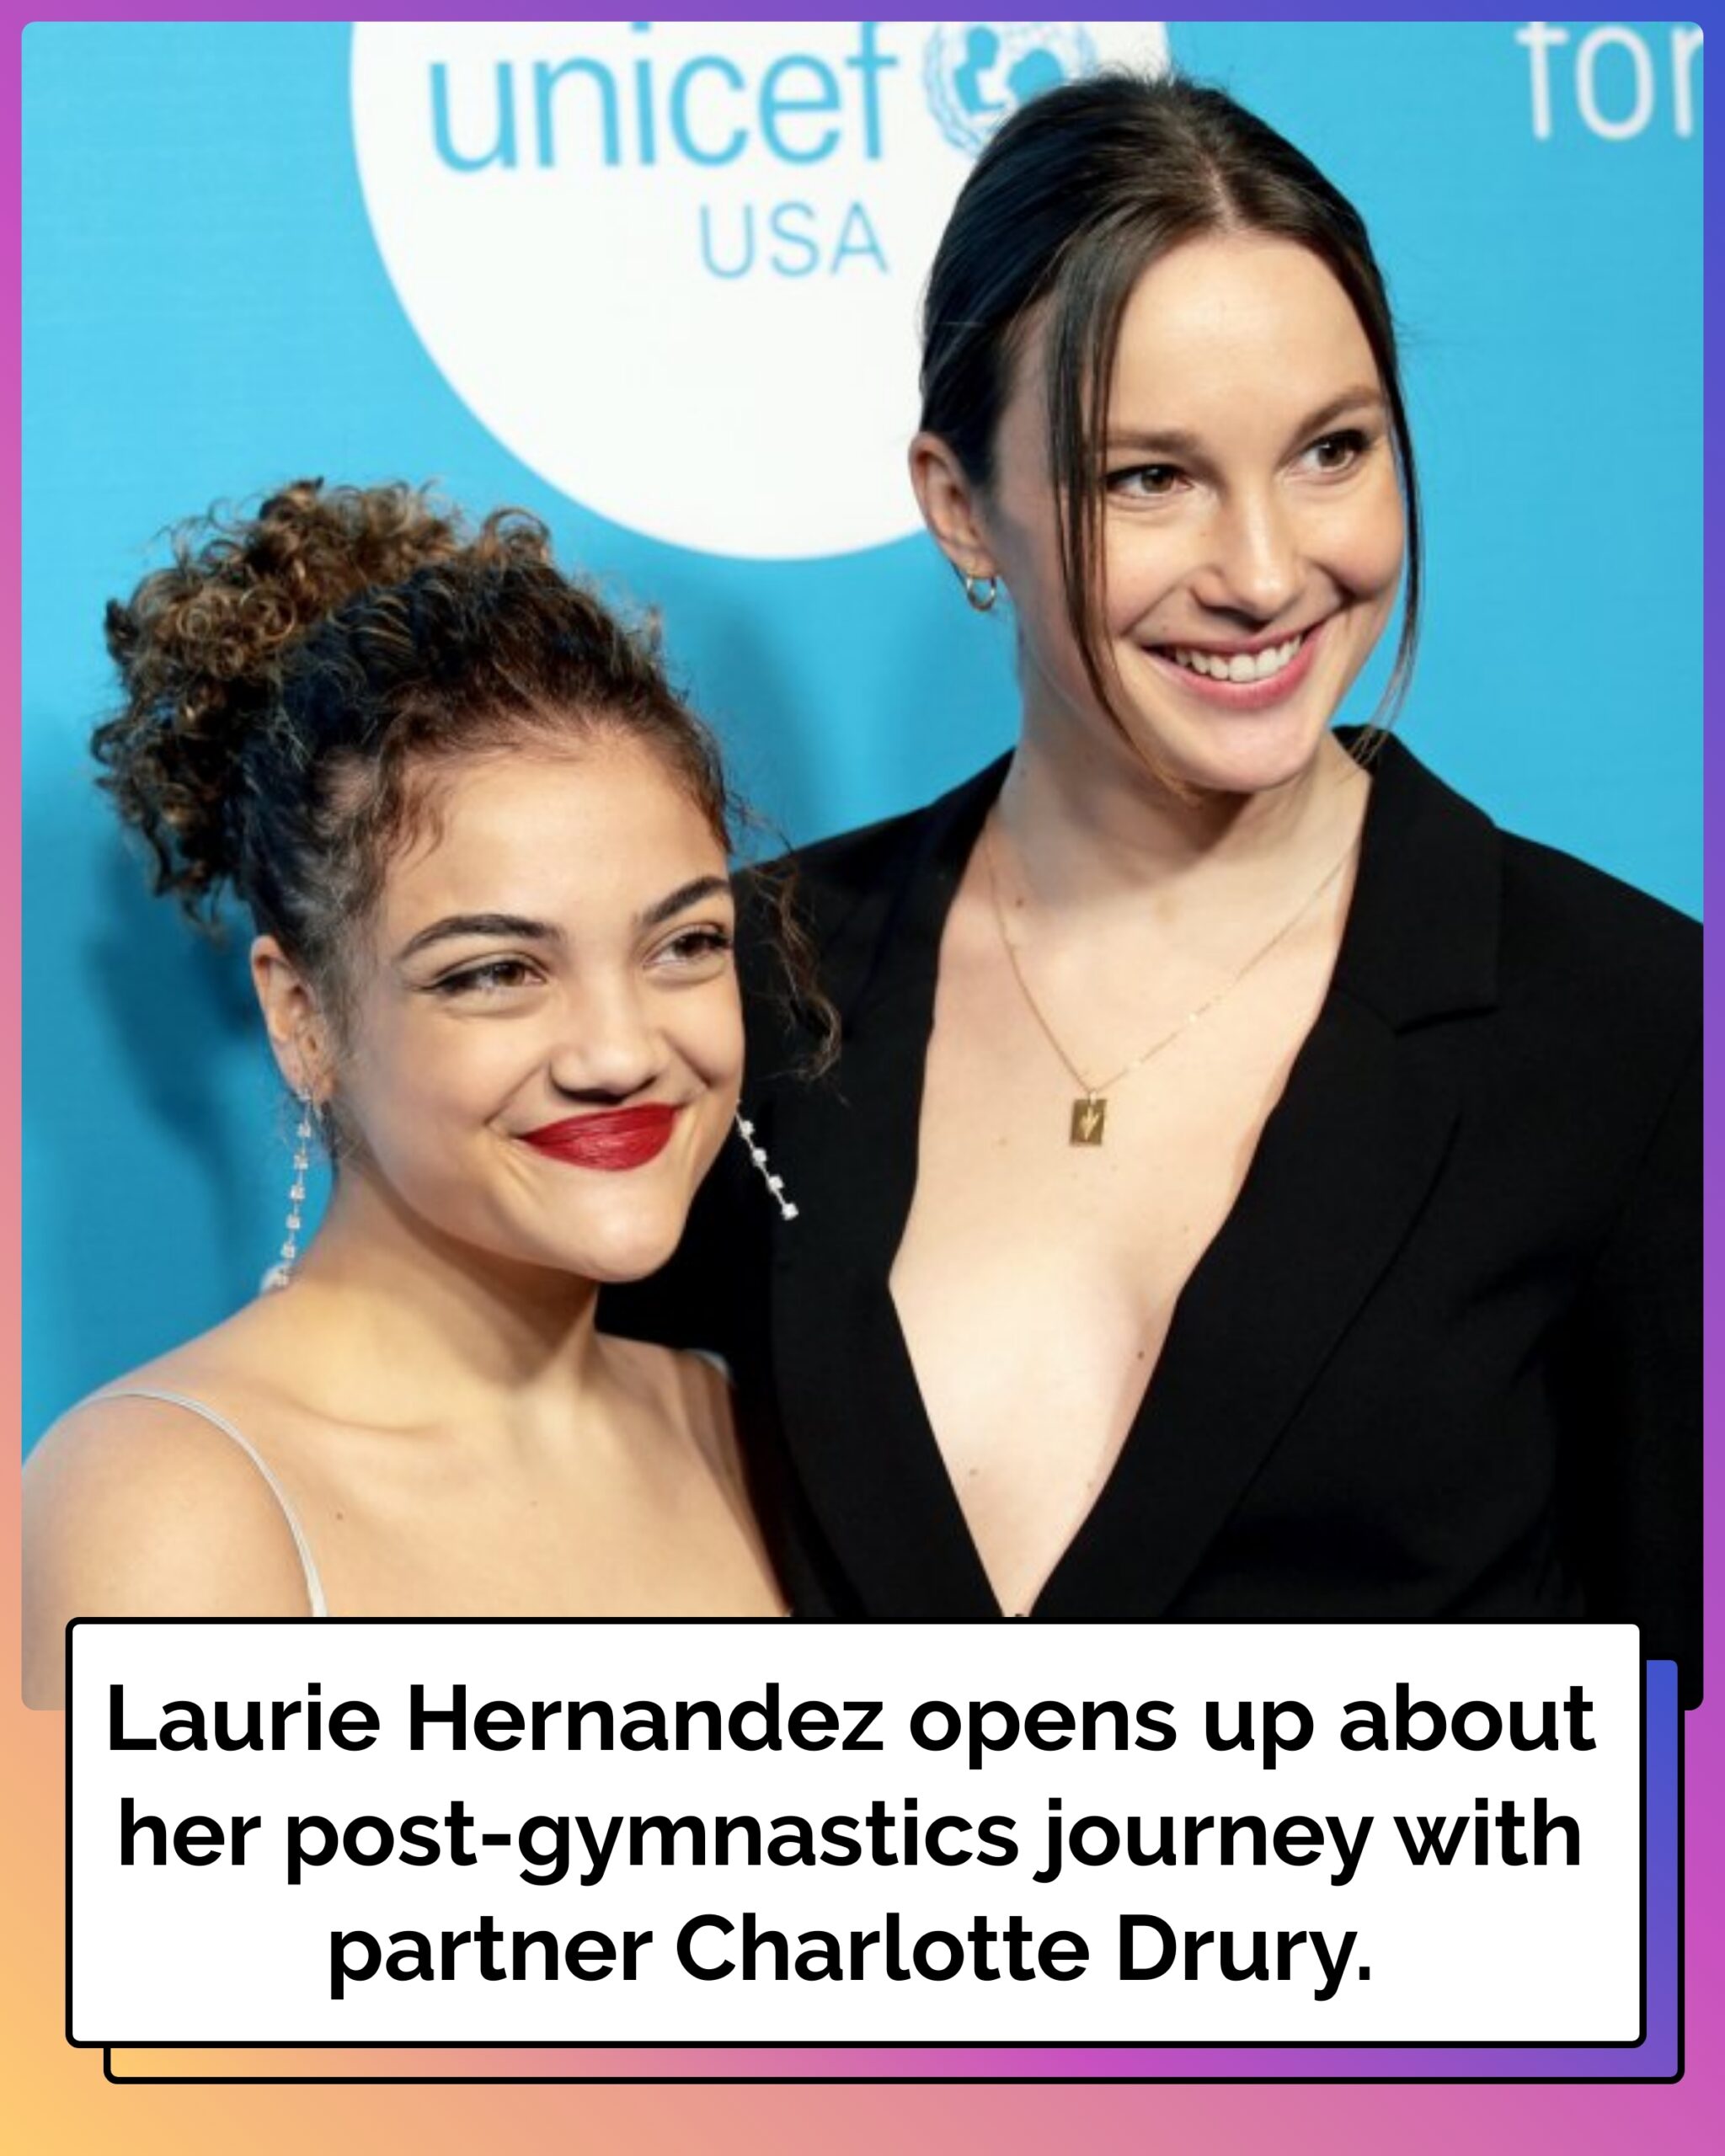 Laurie Hernandez Details Post-Gymnastics Life With Partner Charlotte